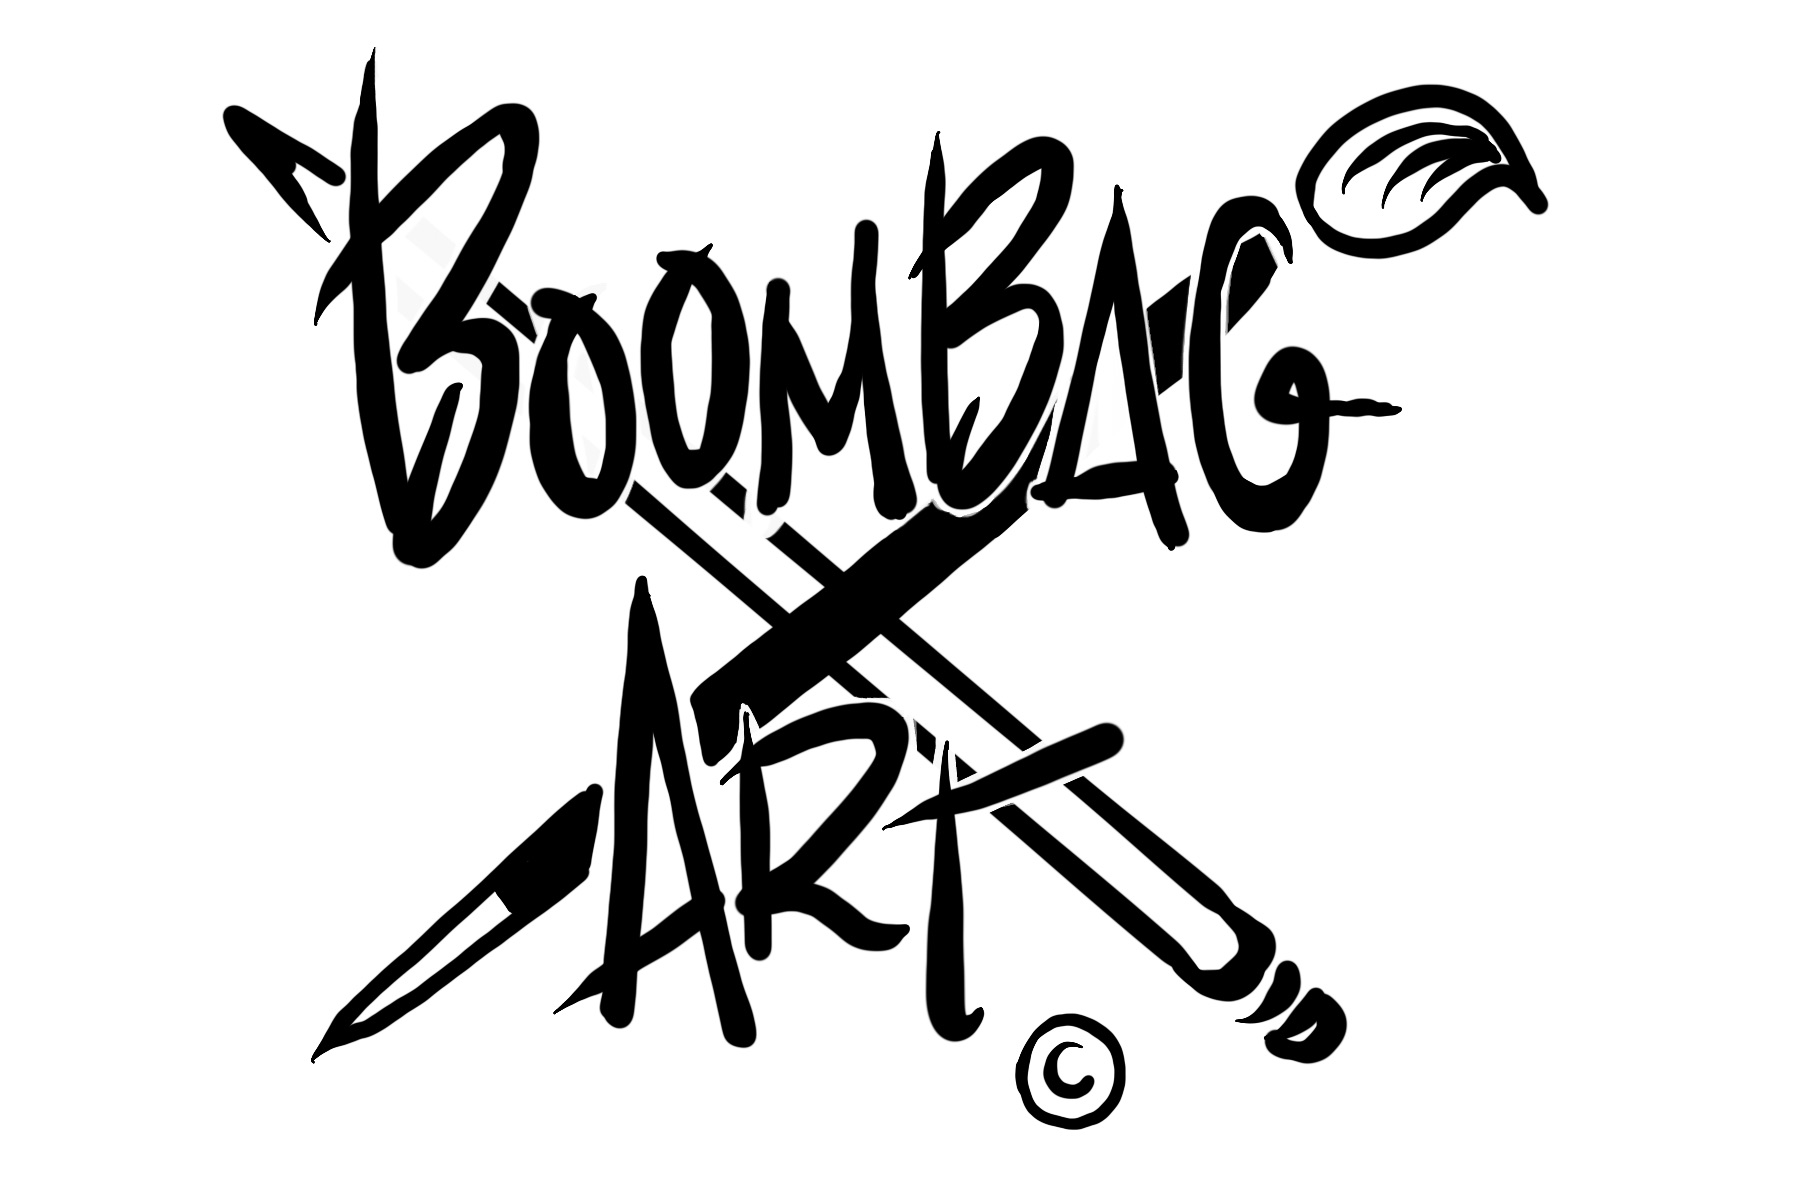 Boom logo